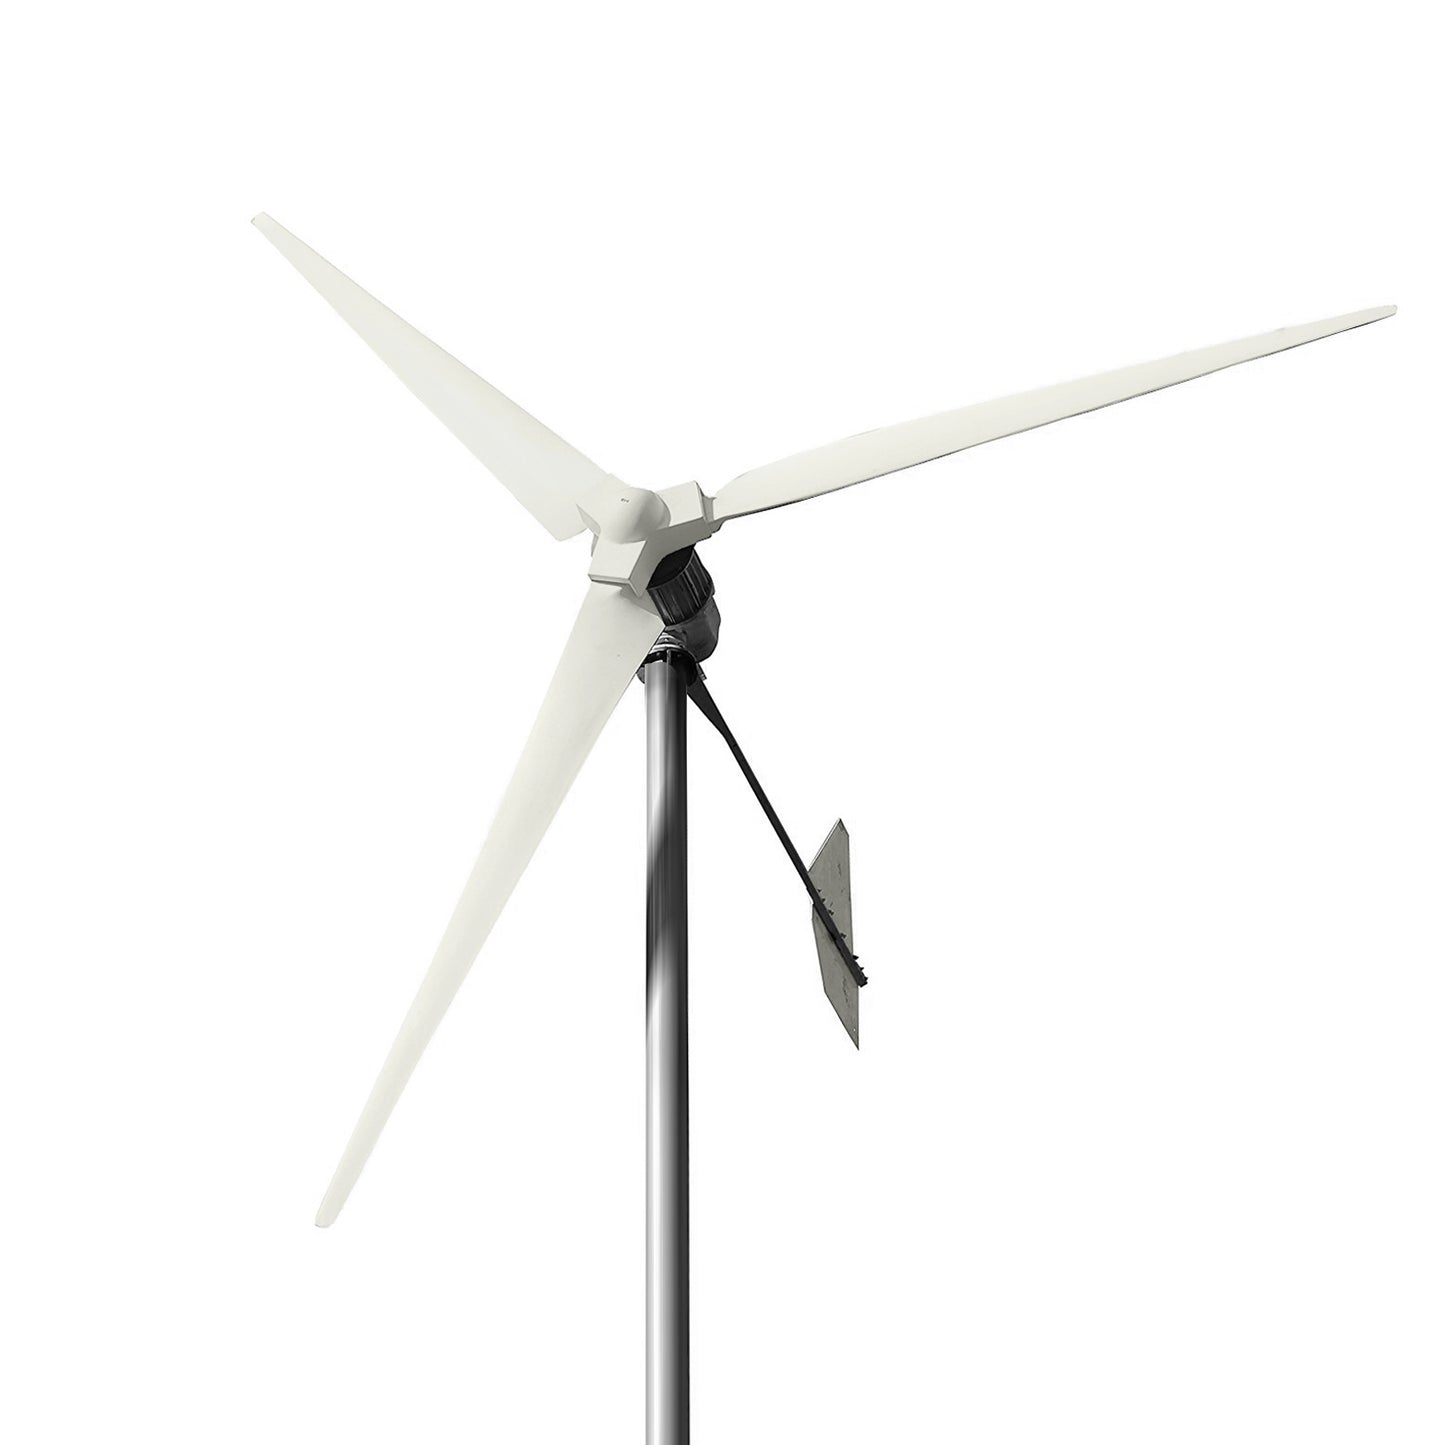 Tumo-Int 3000W 3Blades Kit de generador de turbina eólica con controlador de refuerzo de viento (24/48V)